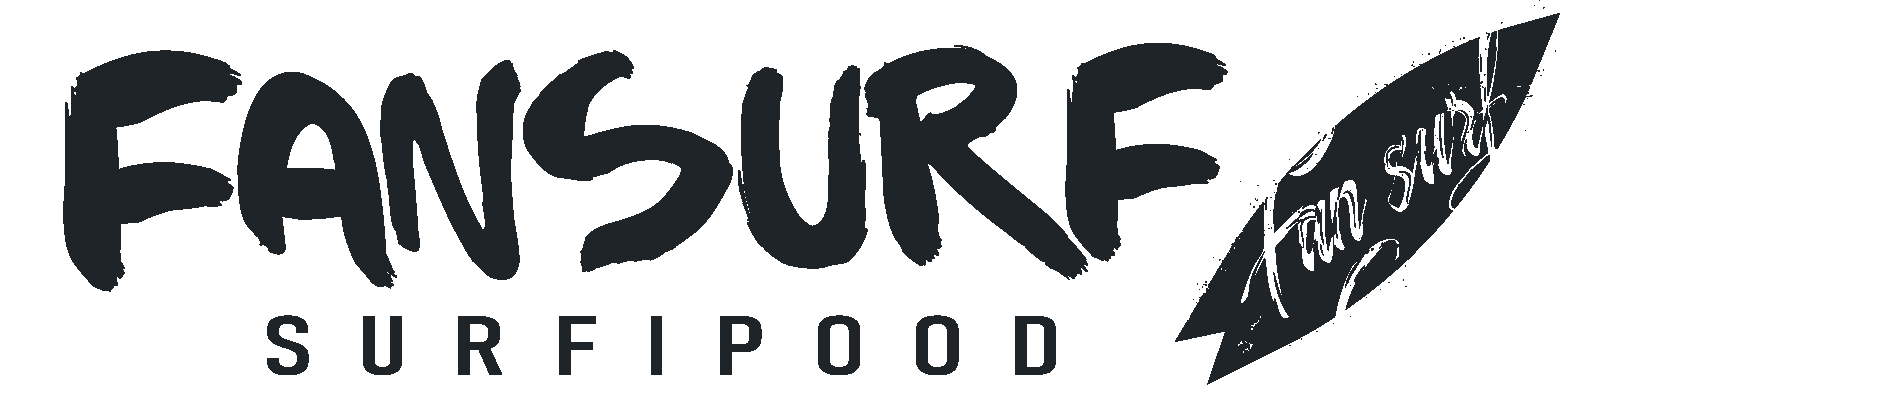 Fansurf Surfipood